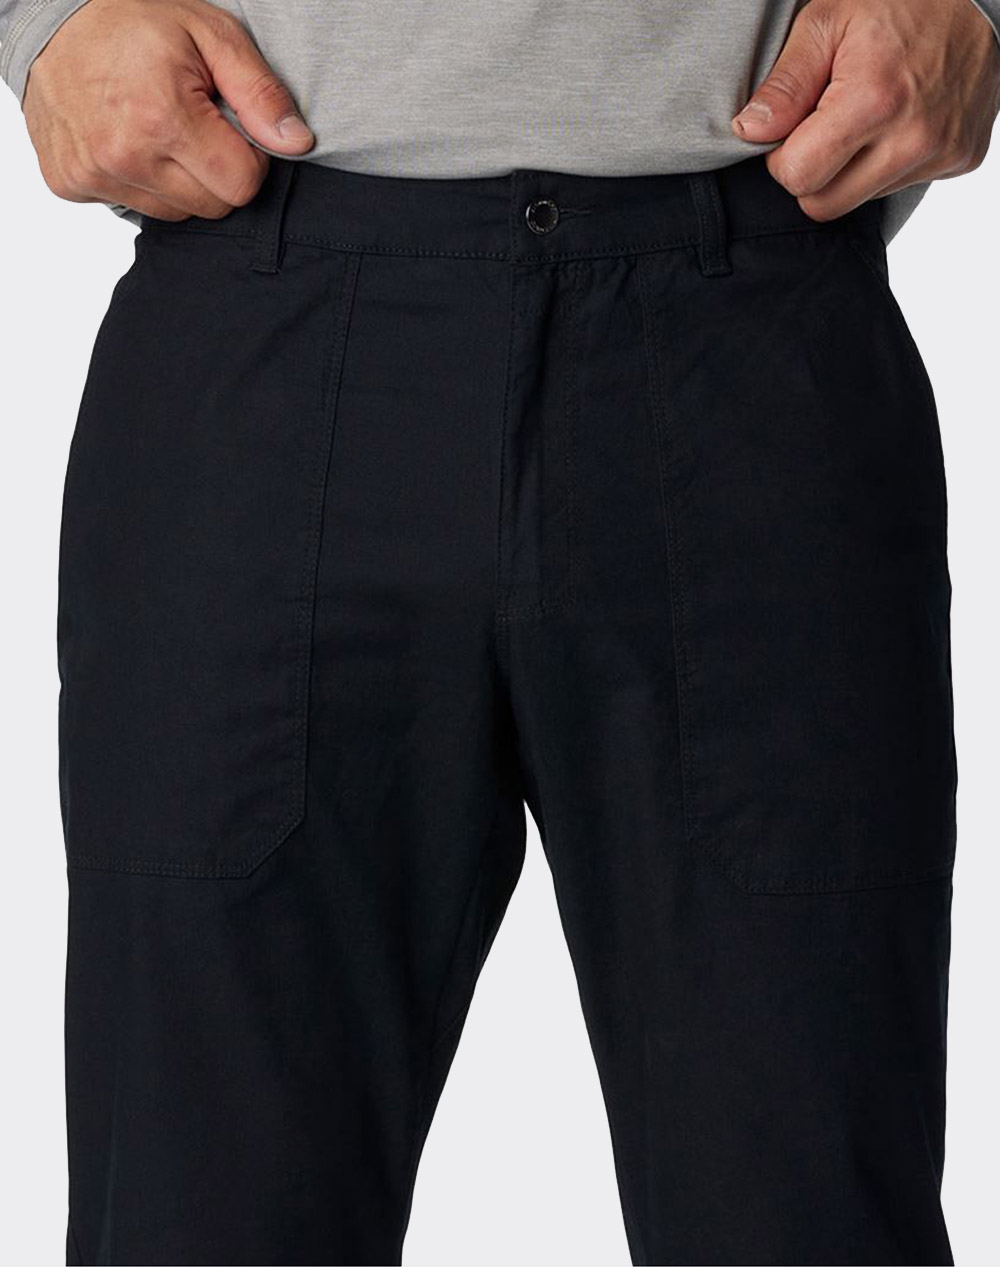 Men's Flex ROC™ II Lined Pants